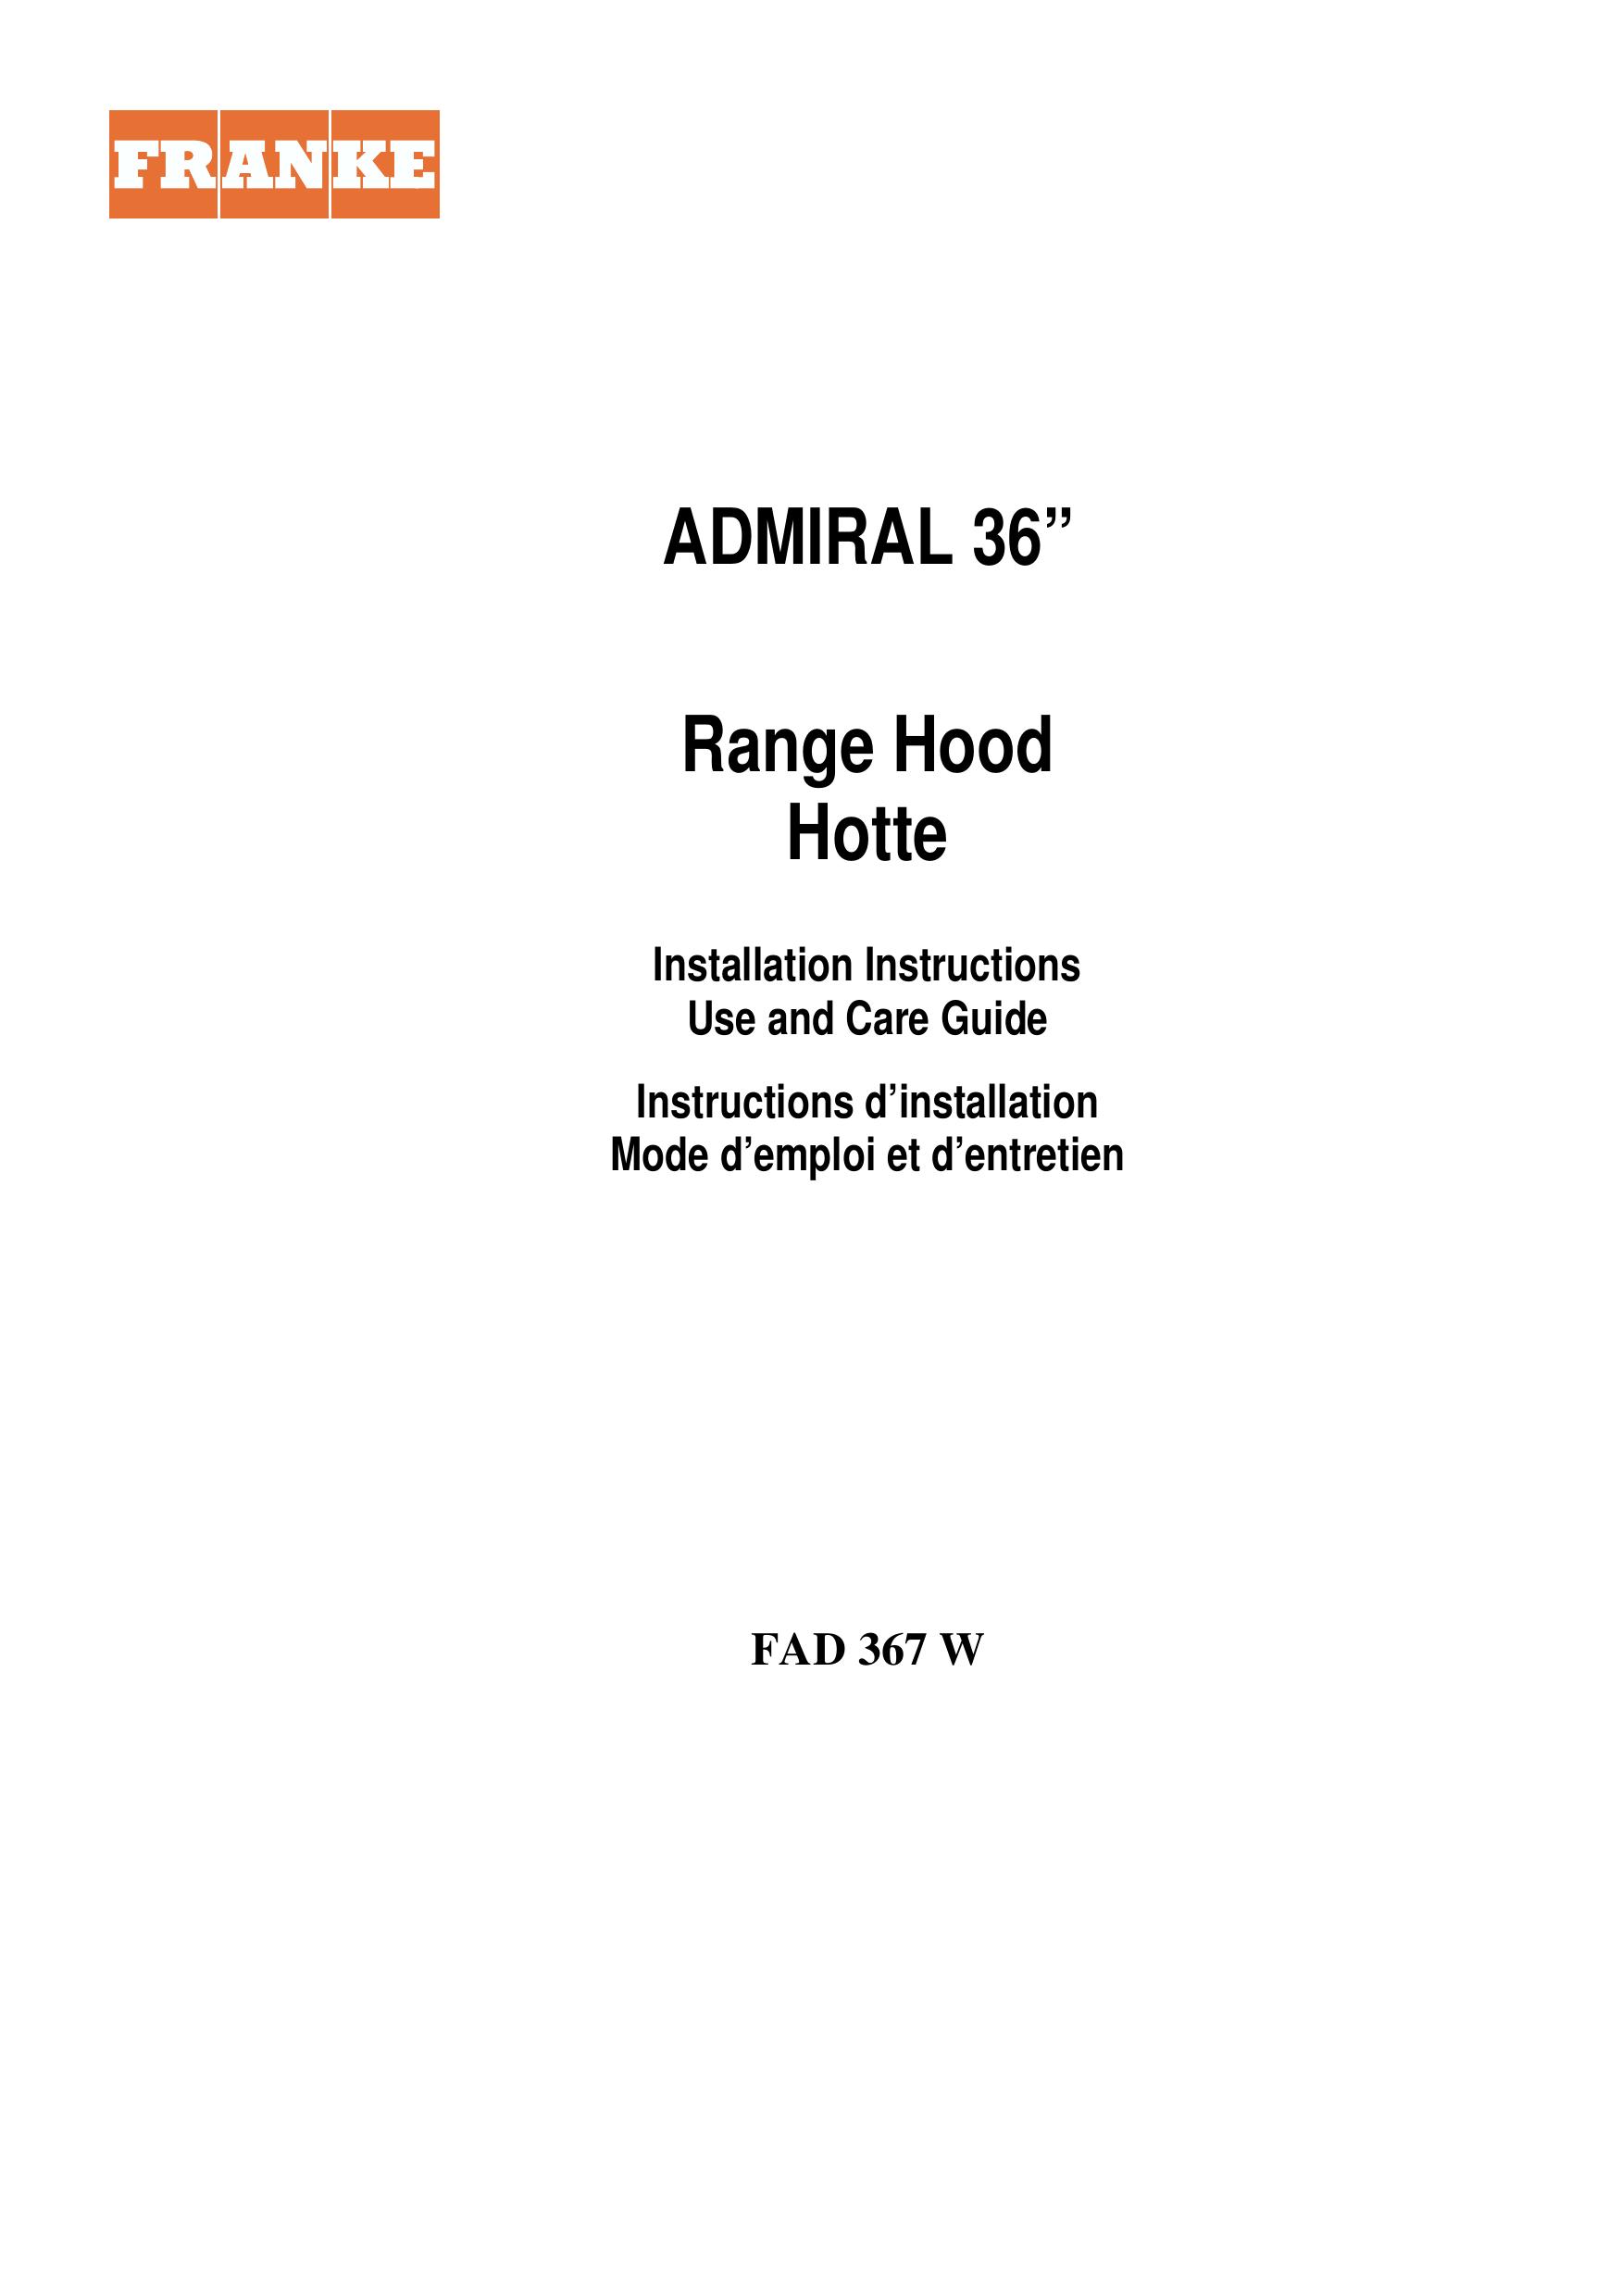 Franke Consumer Products FAD 367 W Ventilation Hood User Manual